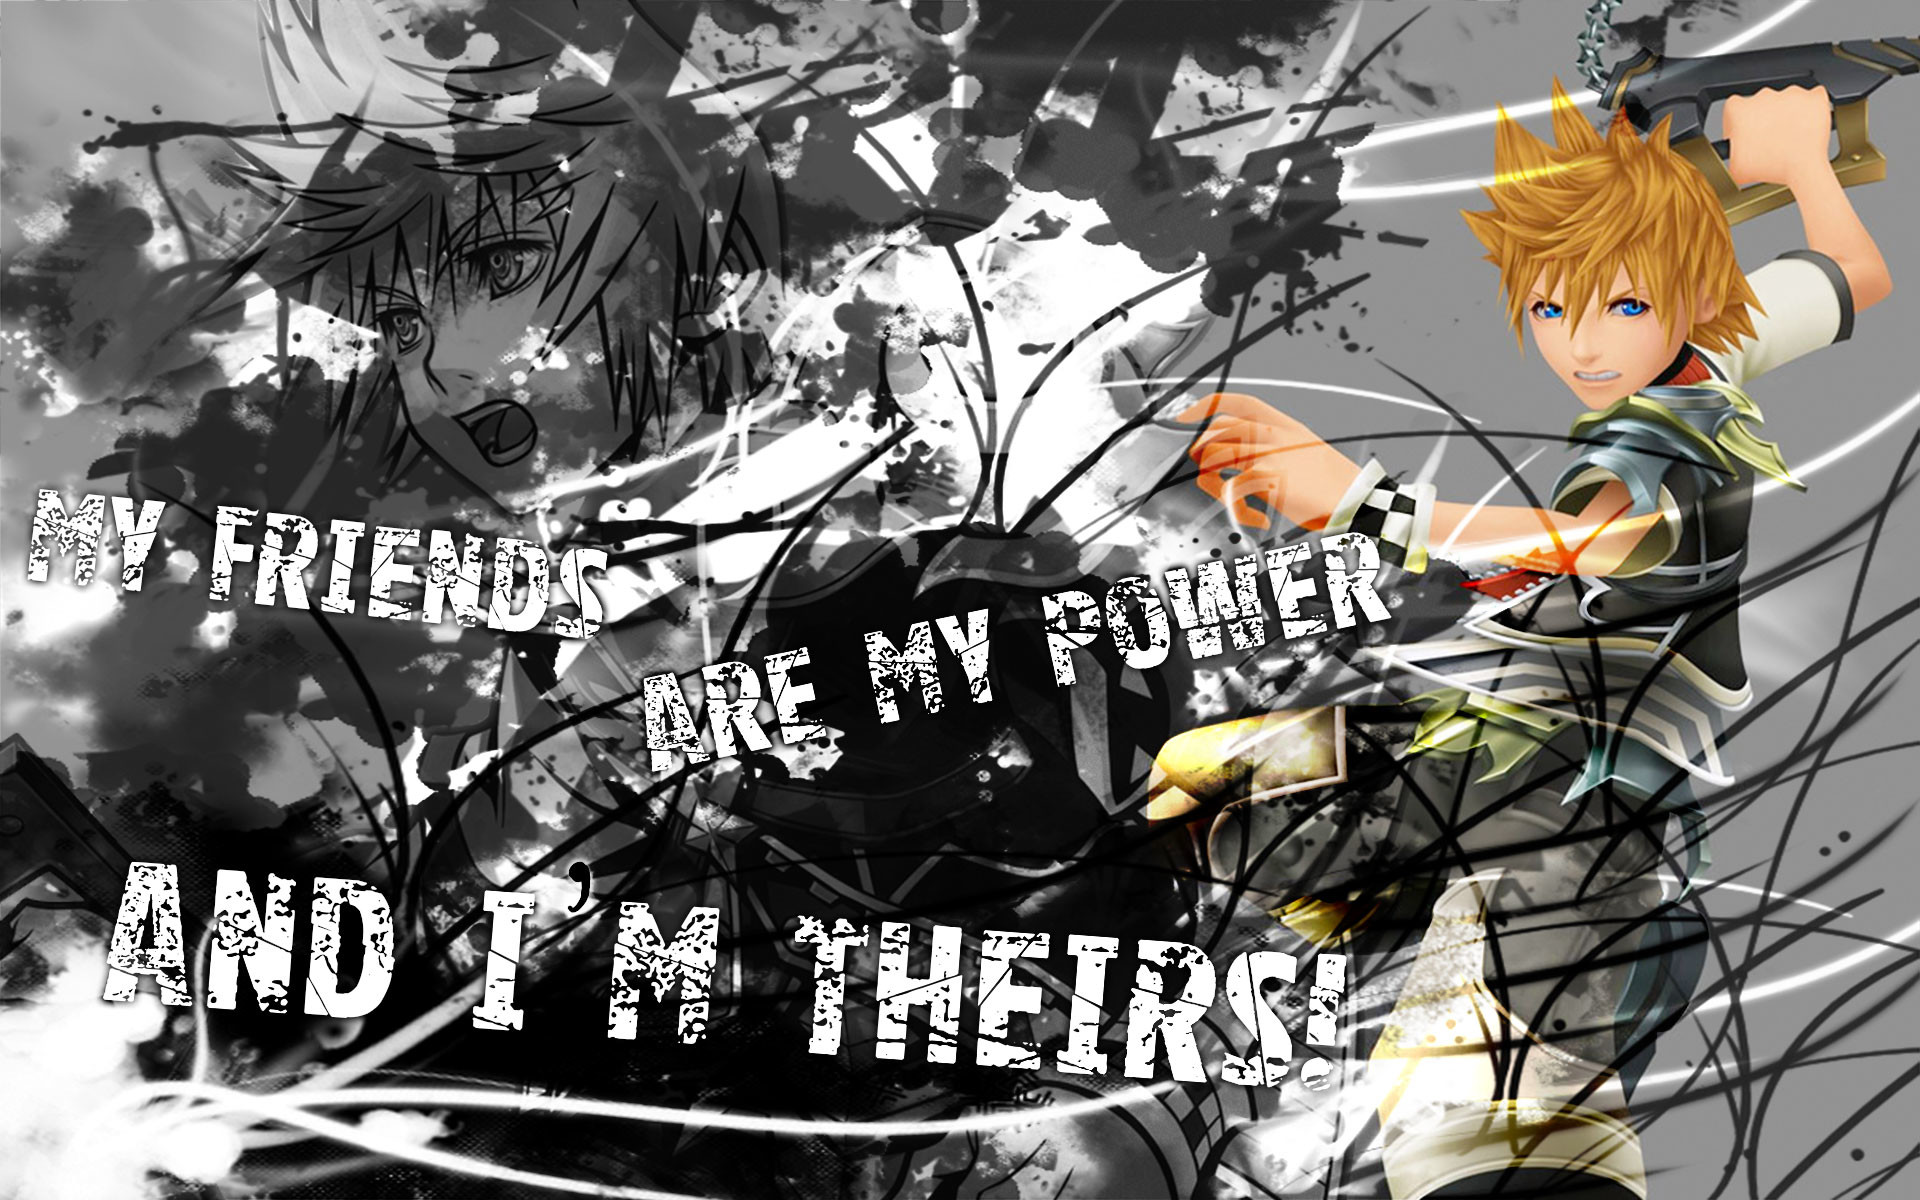 Roxas  Kingdom Hearts 3582 Days  Mobile Wallpaper by Pupukachoo 643415   Zerochan Anime Image Board Mobile